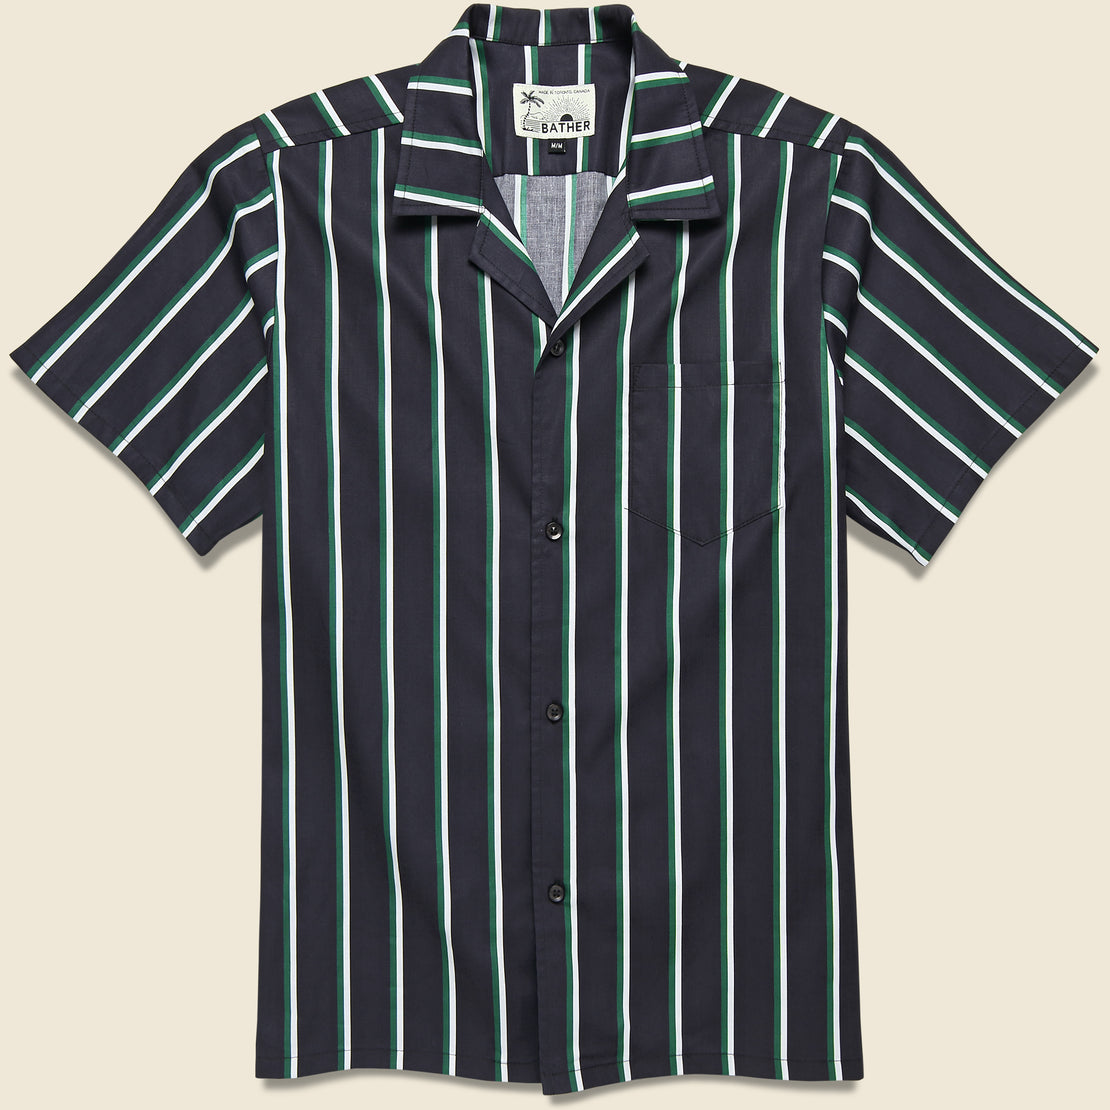 Bather Fine Stripe Camp Shirt - Black/Green/White